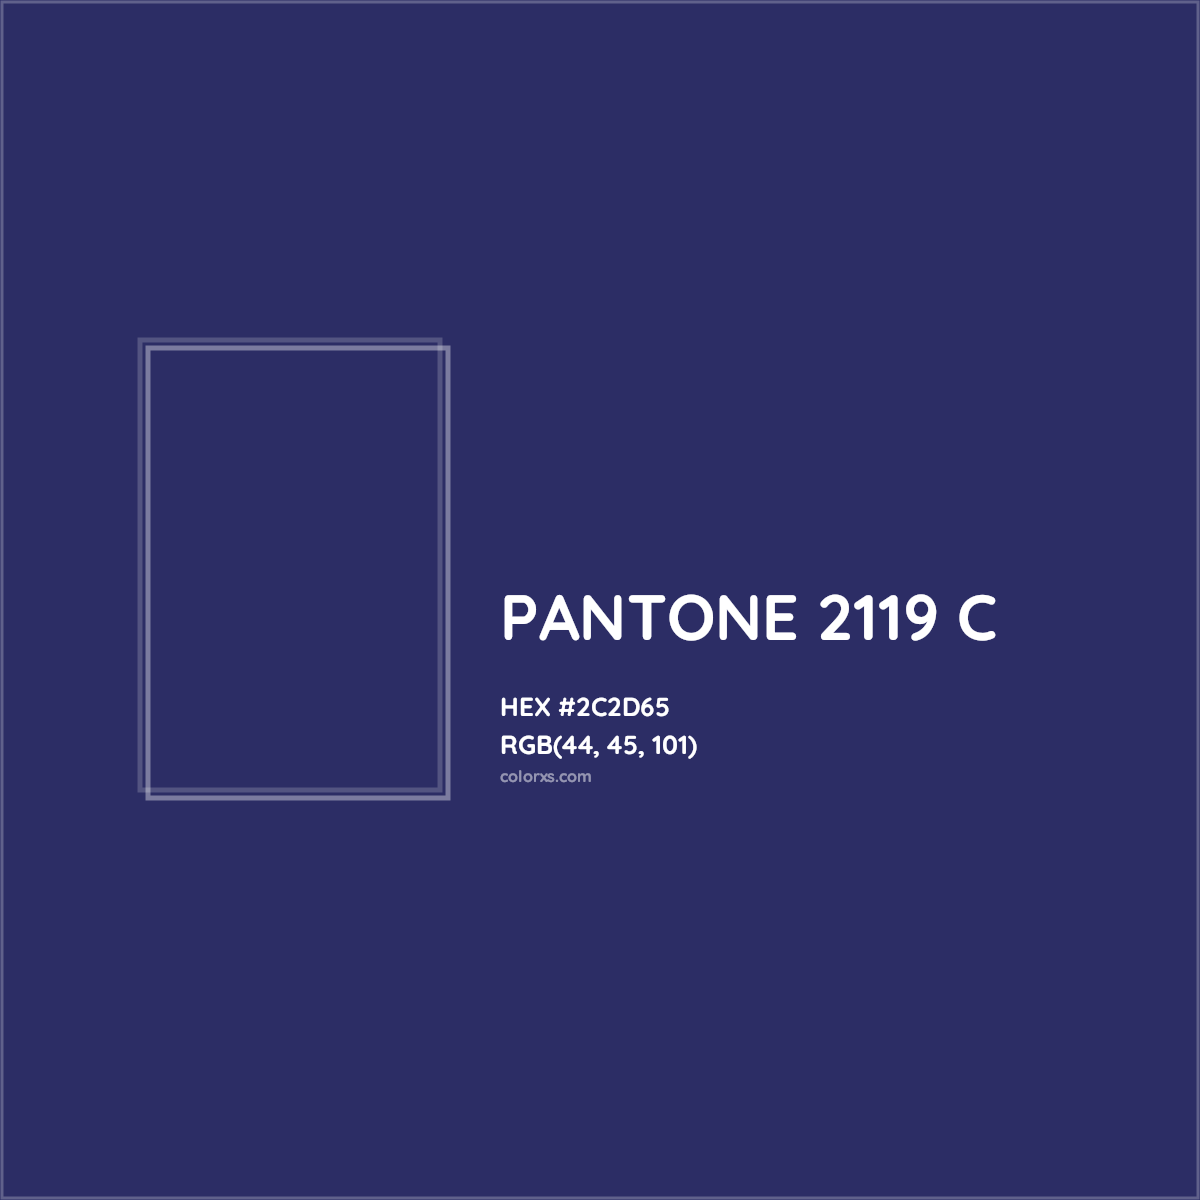 HEX #2C2D65 PANTONE 2119 C CMS Pantone PMS - Color Code